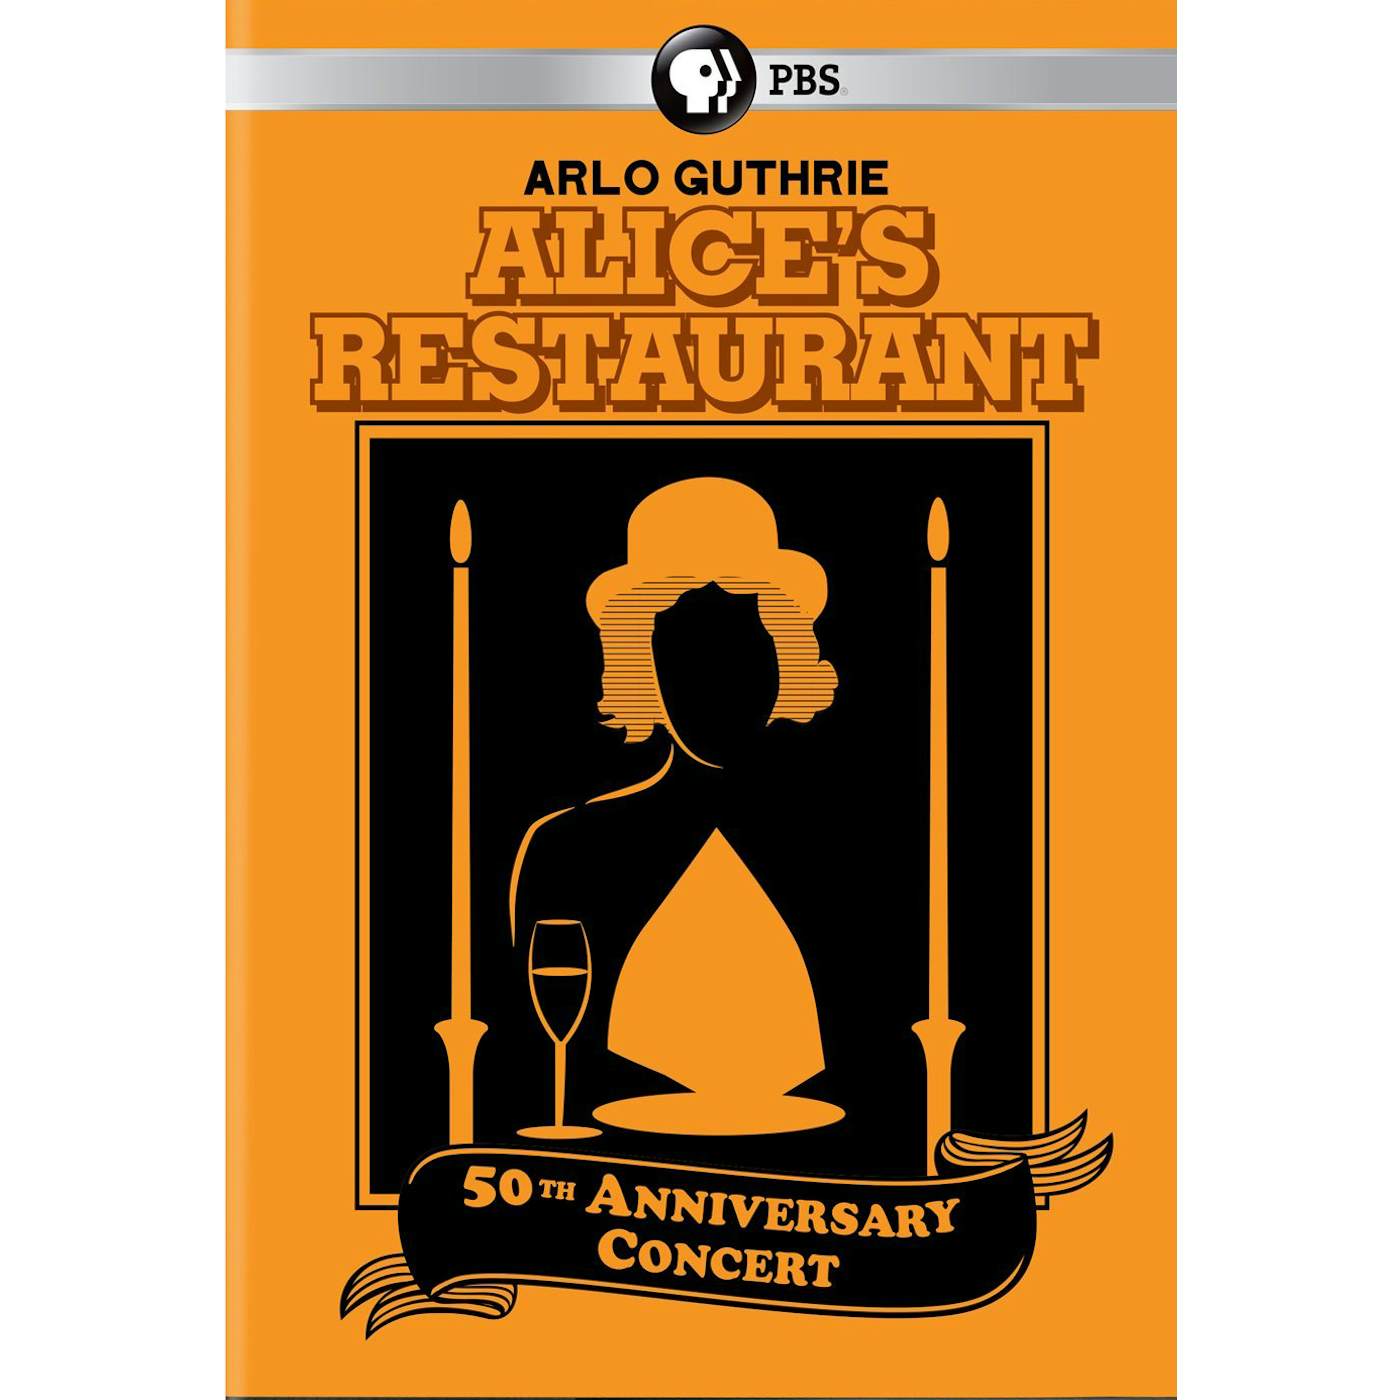 Arlo Guthrie ALICE'S RESTAURANT 50TH ANNIVERSARY CONCERT DVD